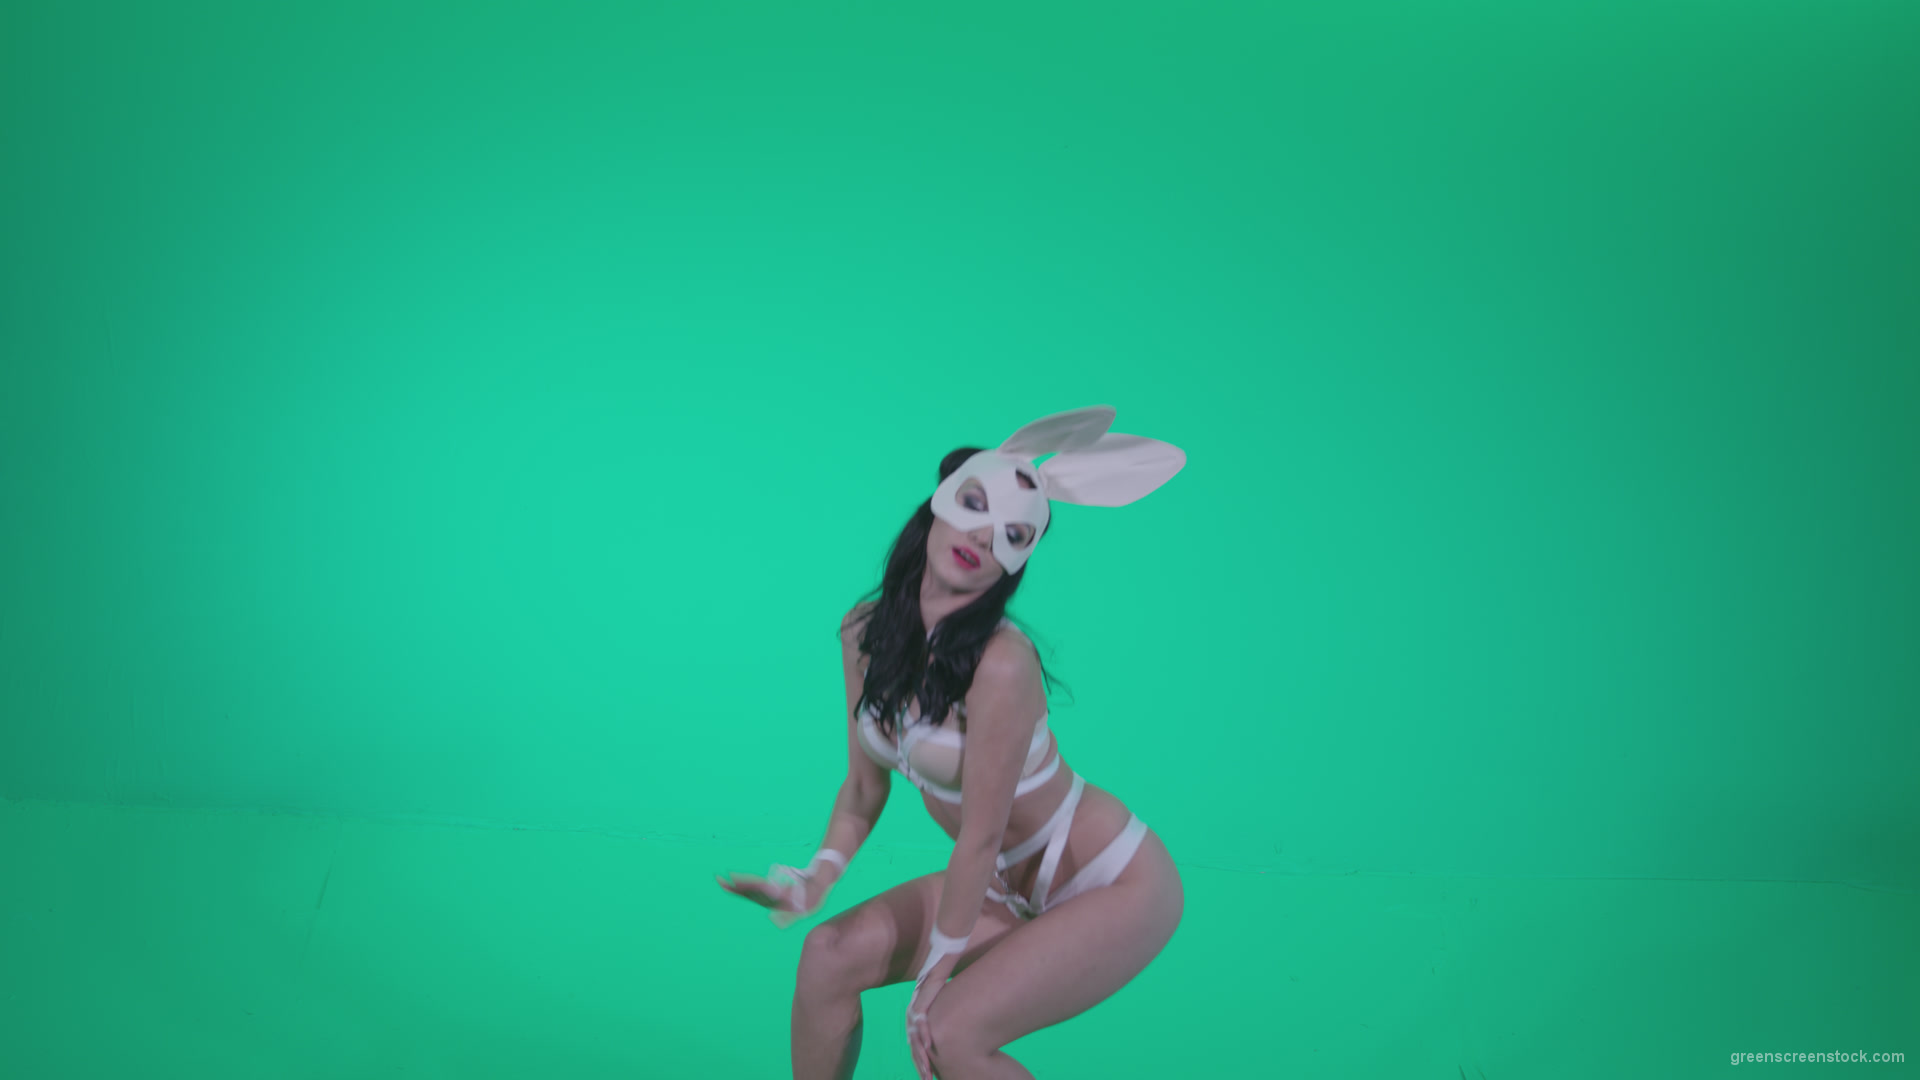 Go-go-Dancer-White-Rabbit-m11-Green-Screen-Video-Footage_002 Green Screen Stock